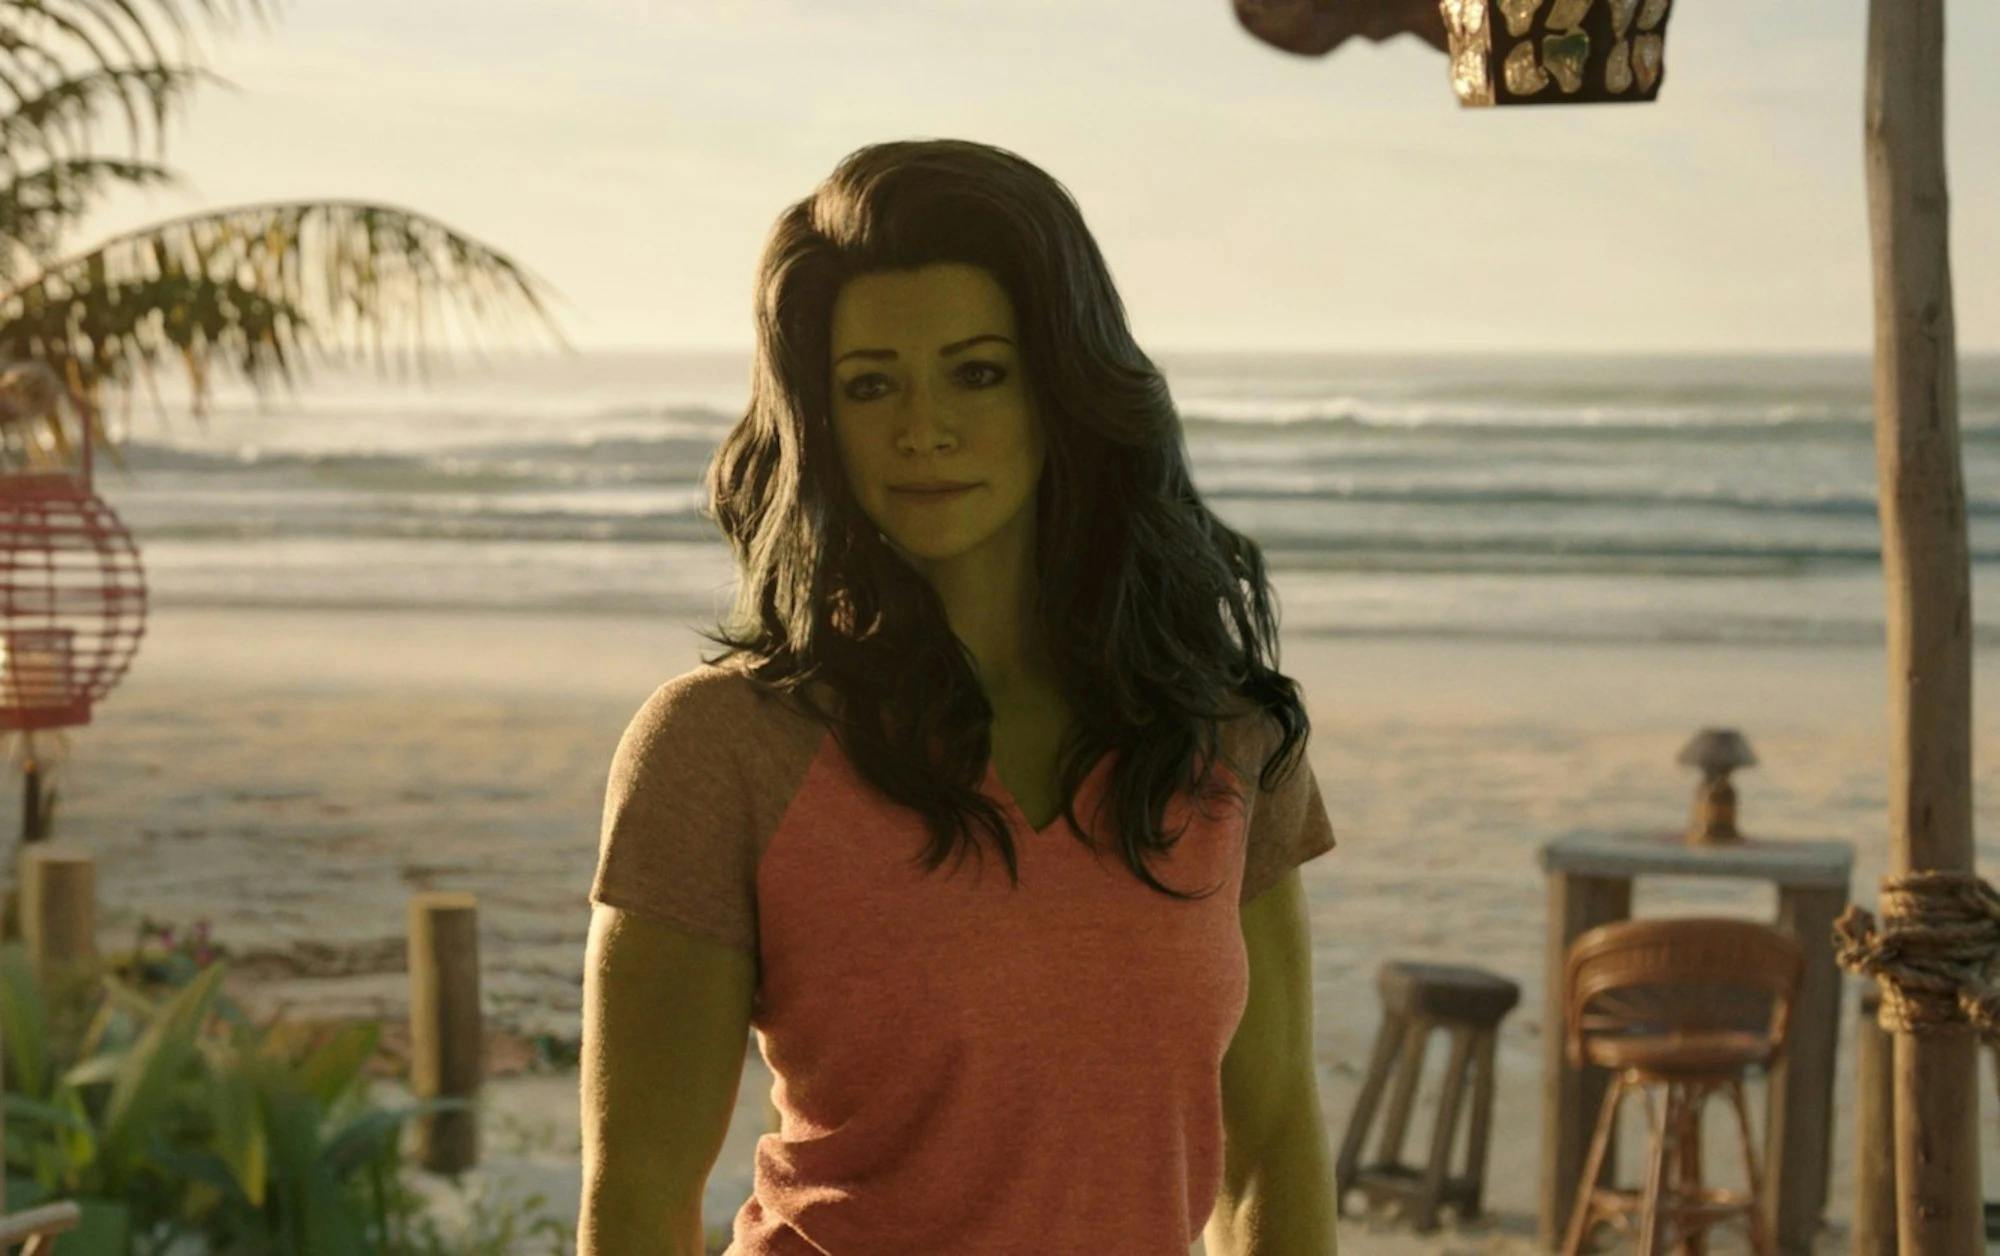 She-Hulk on beach as ESFP type